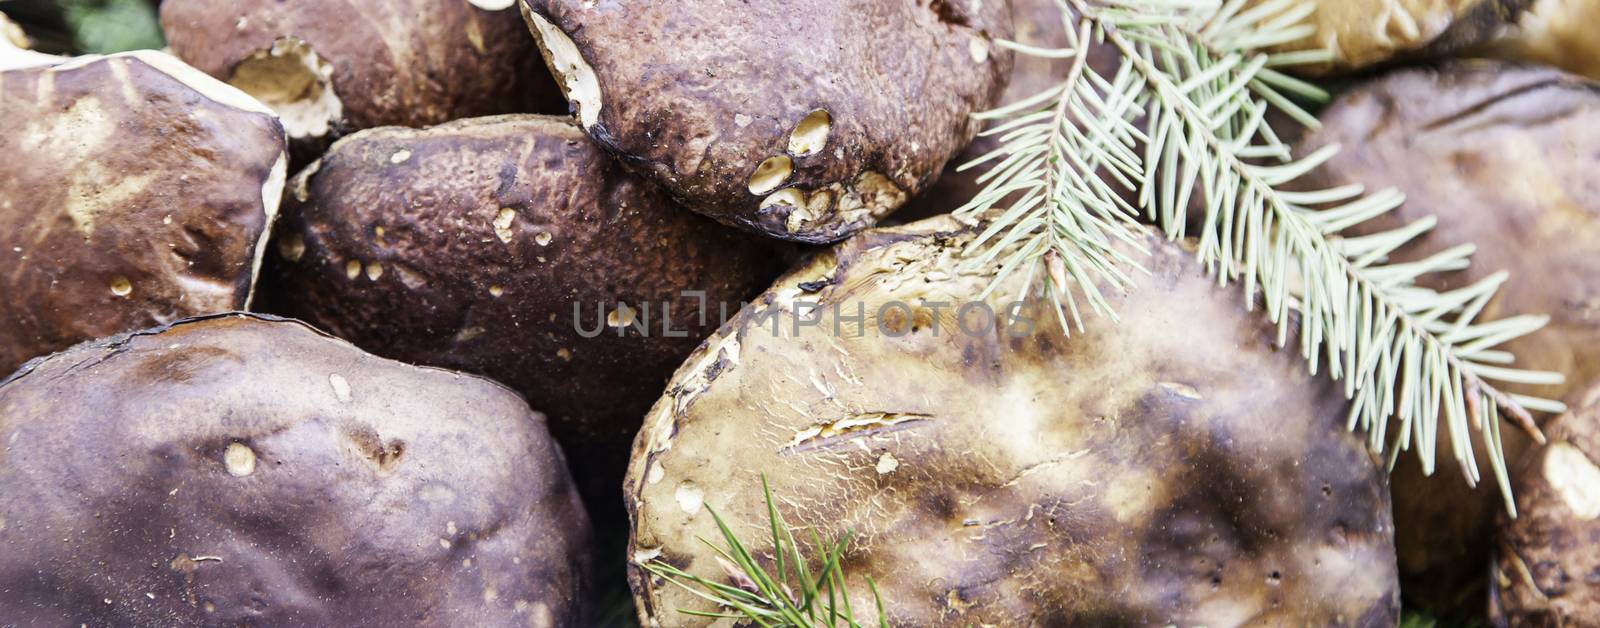 Mountain mushrooms, detail of wild edible mushrooms